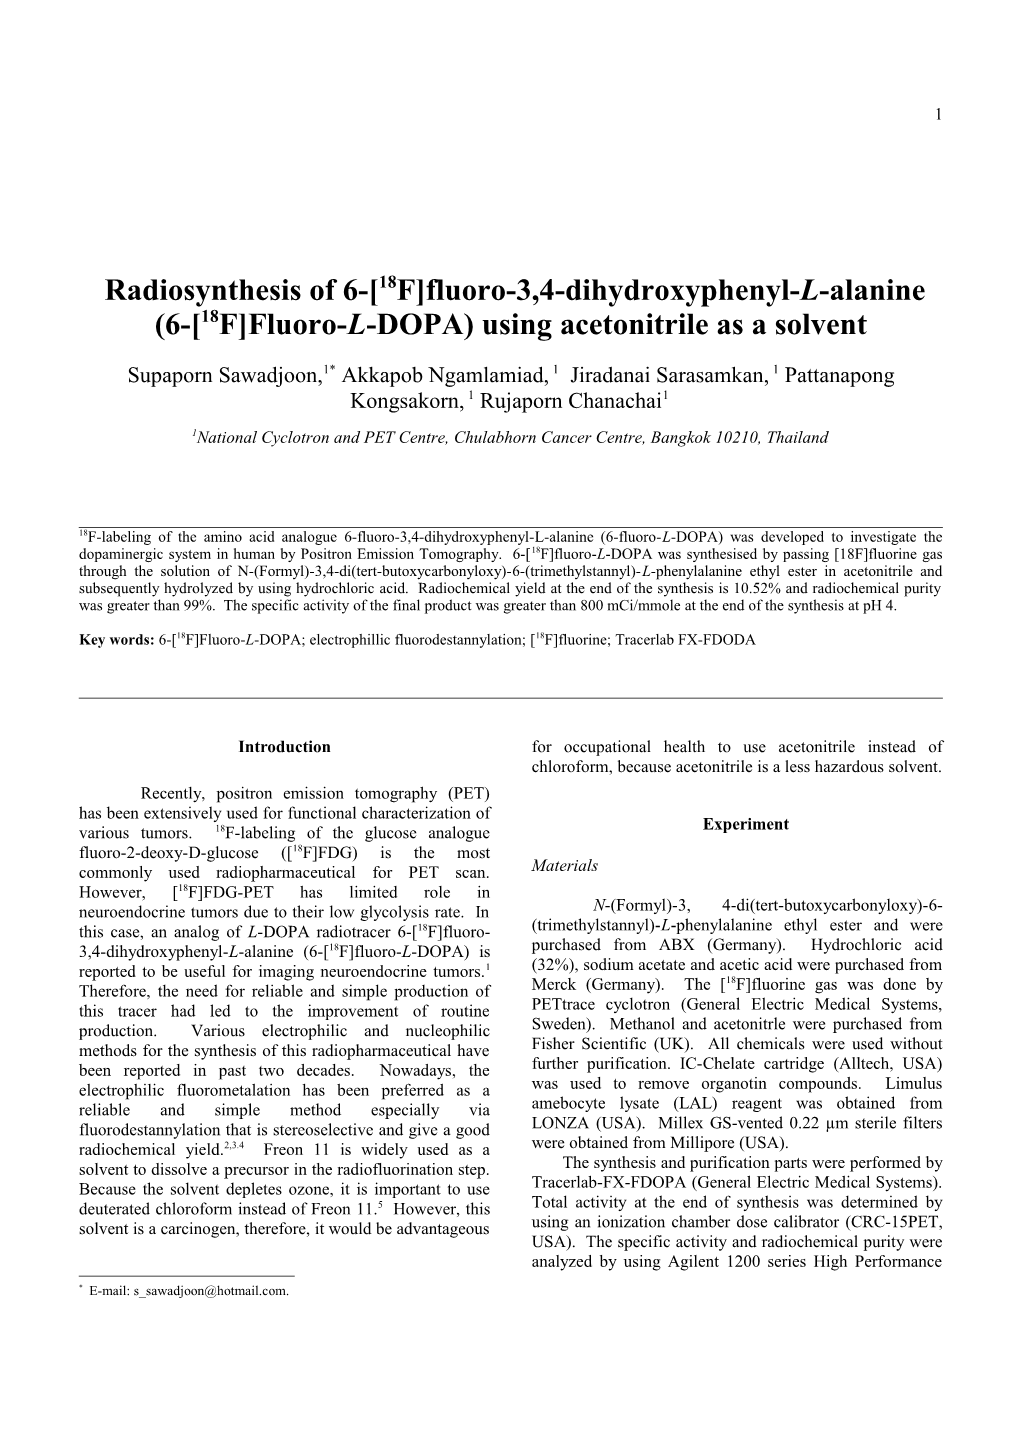 Radiosynthesis of 6- 18F Fluoro-3,4-Dihydroxyphenyl-L-Alanine (6- 18F Fluoro-L-DOPA) Using